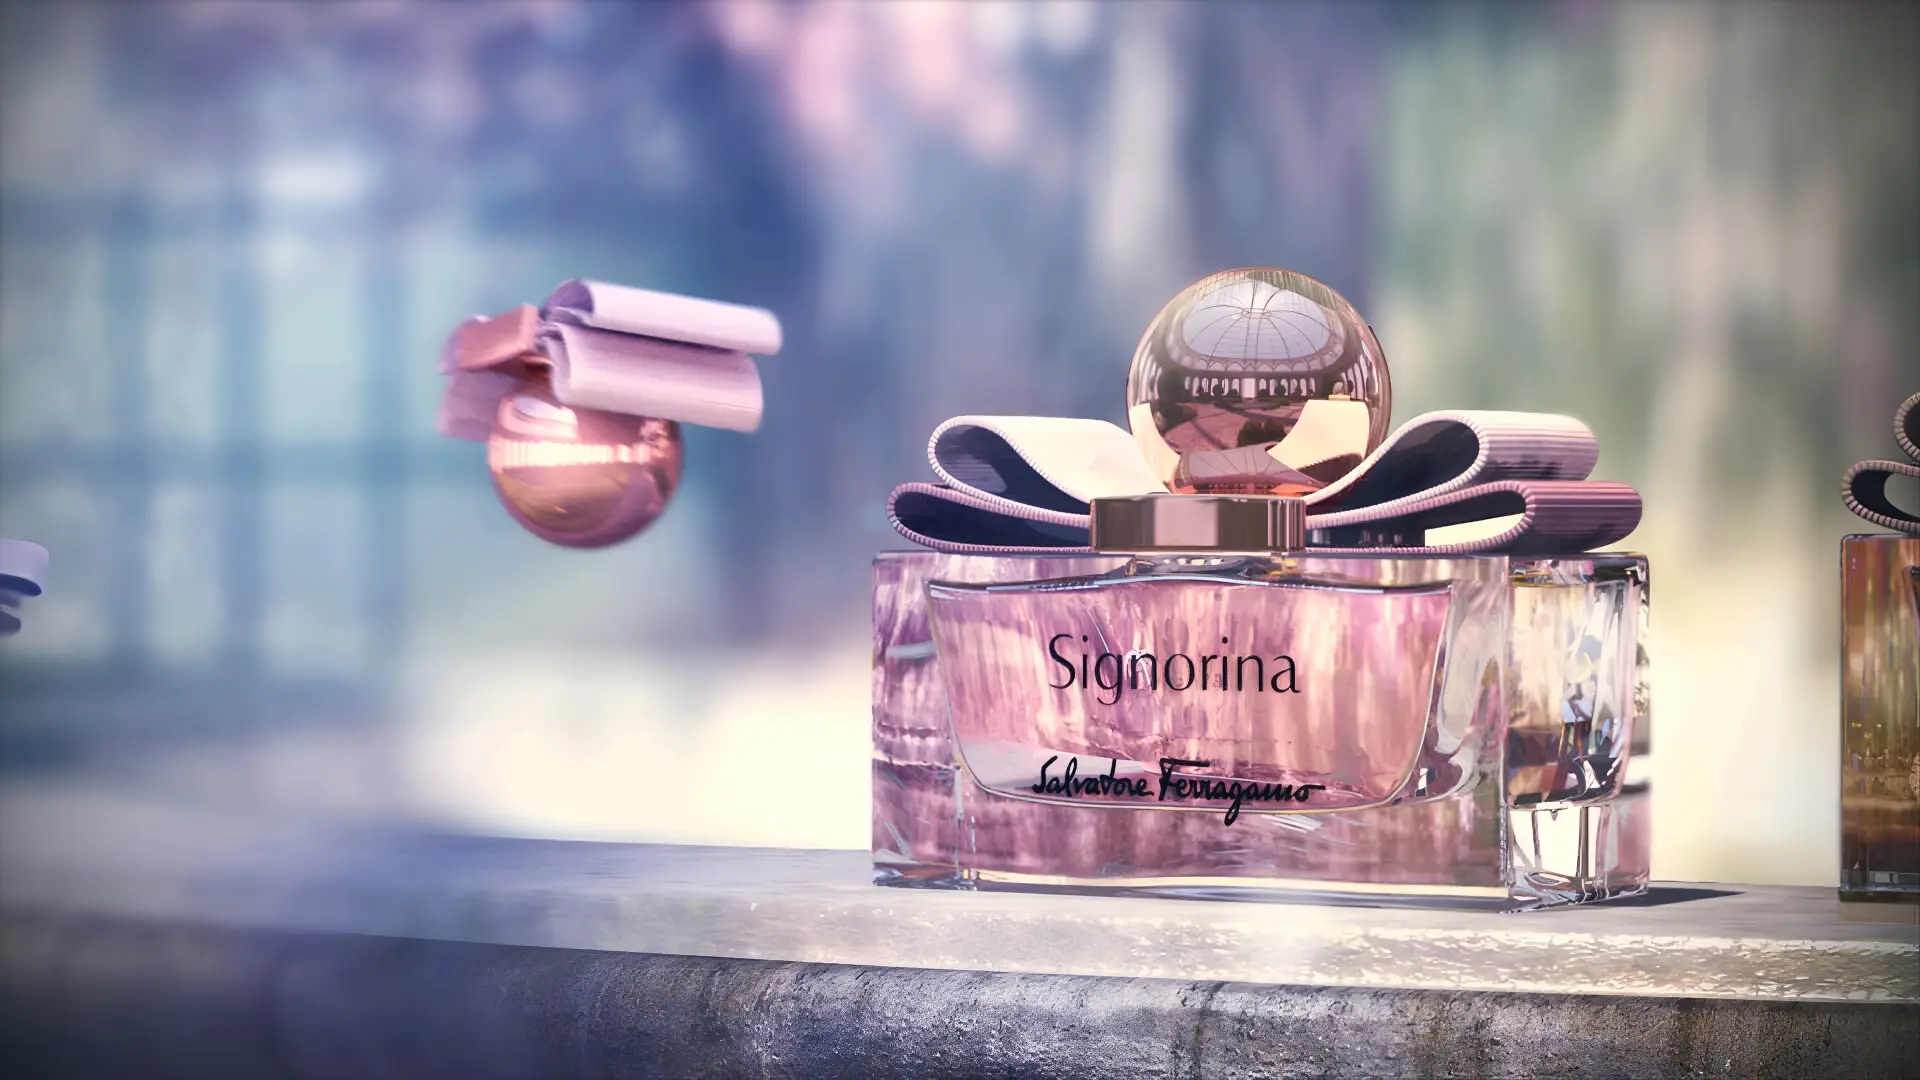 Signorina perfume bottle by Ferragamo